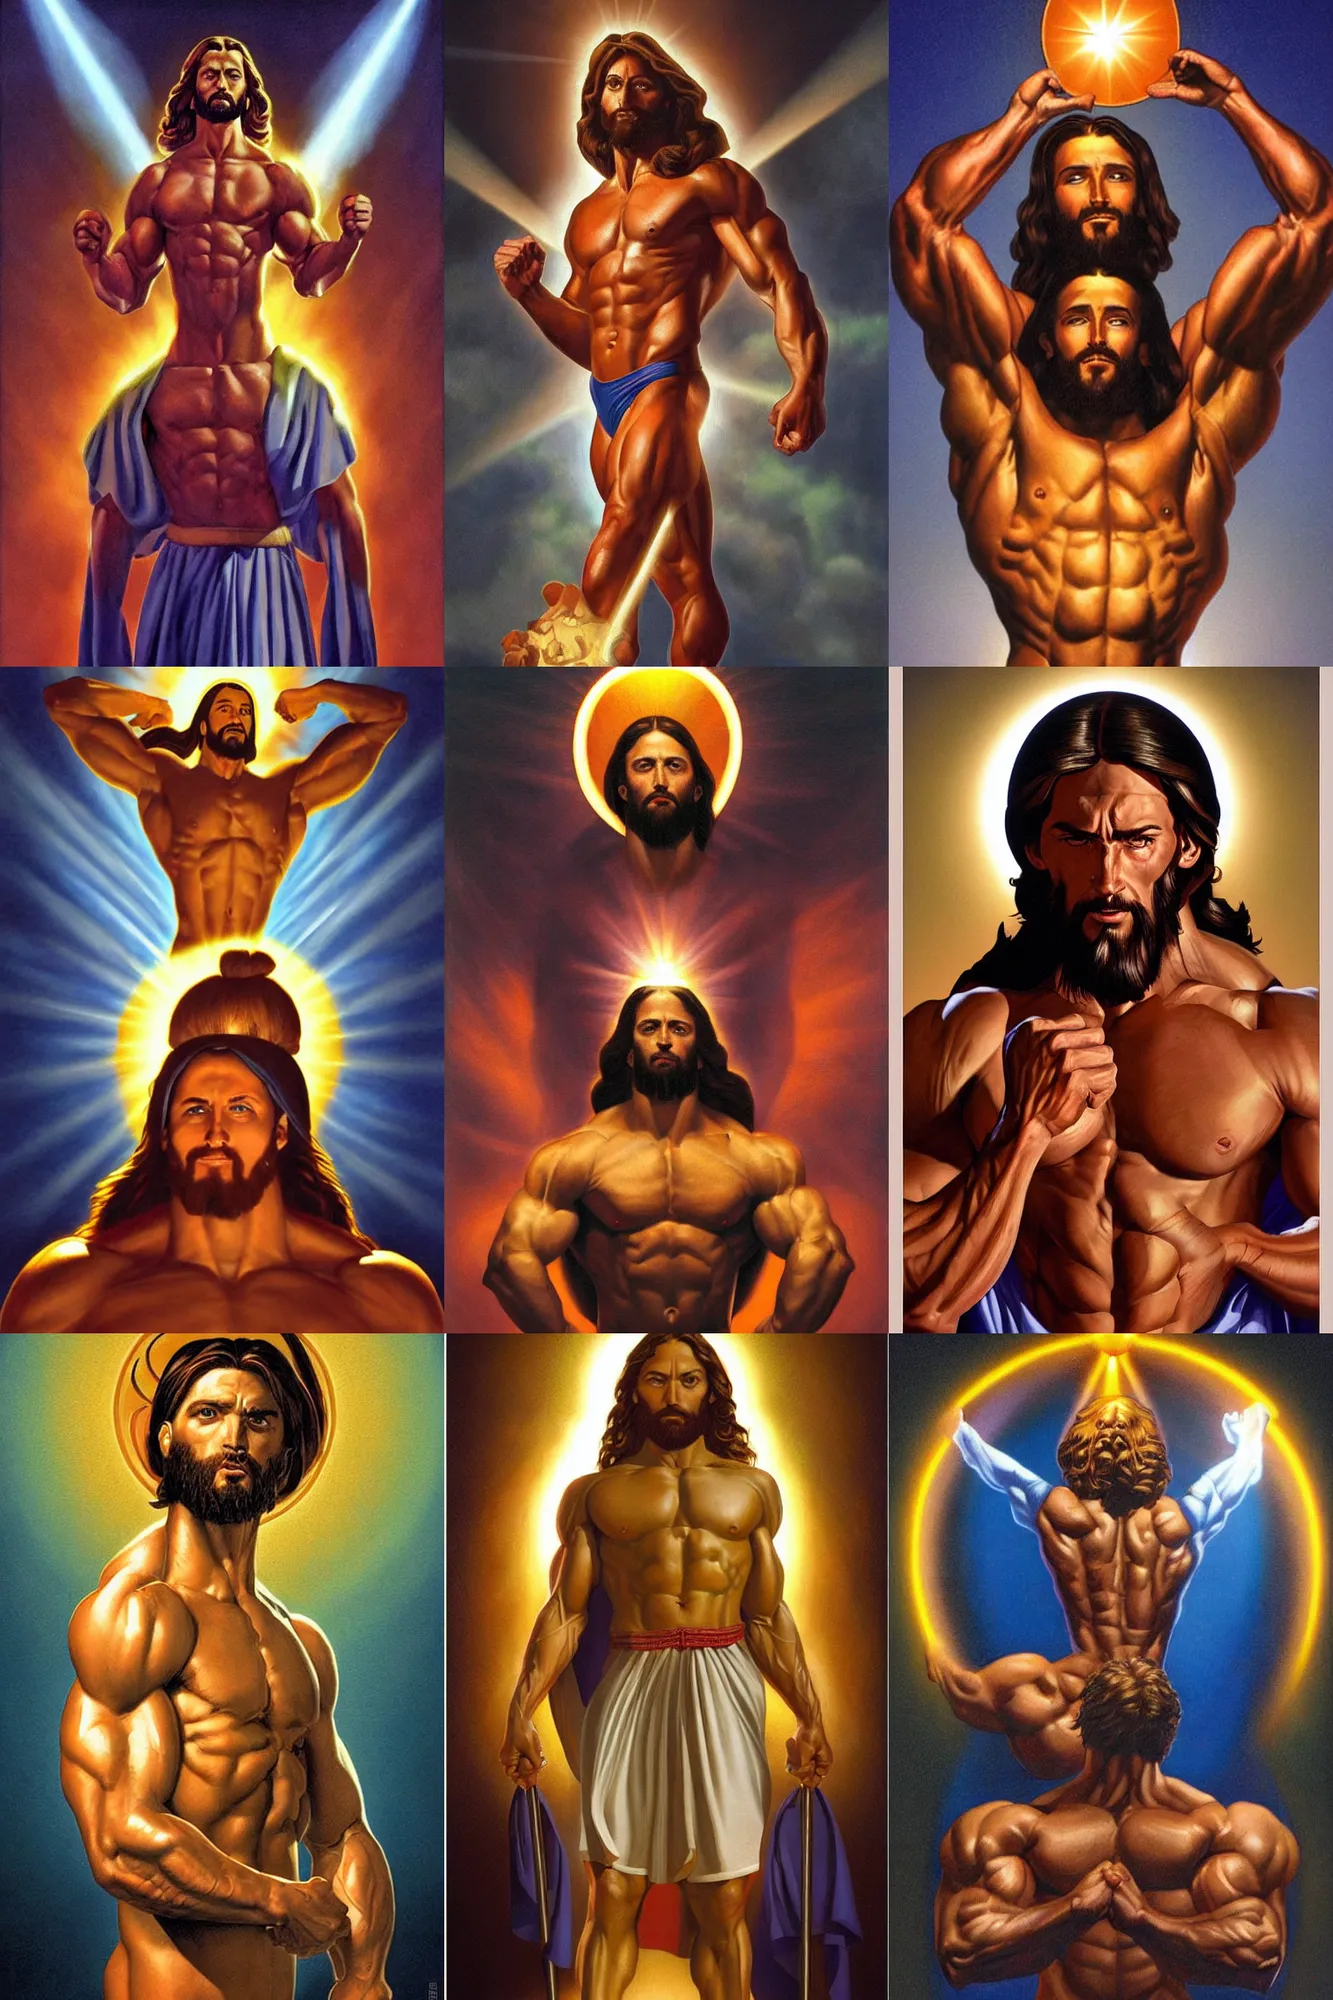 Prompt: jesus as a bodybuilder by greg hildebrandt, halo above head, dramatic lighting